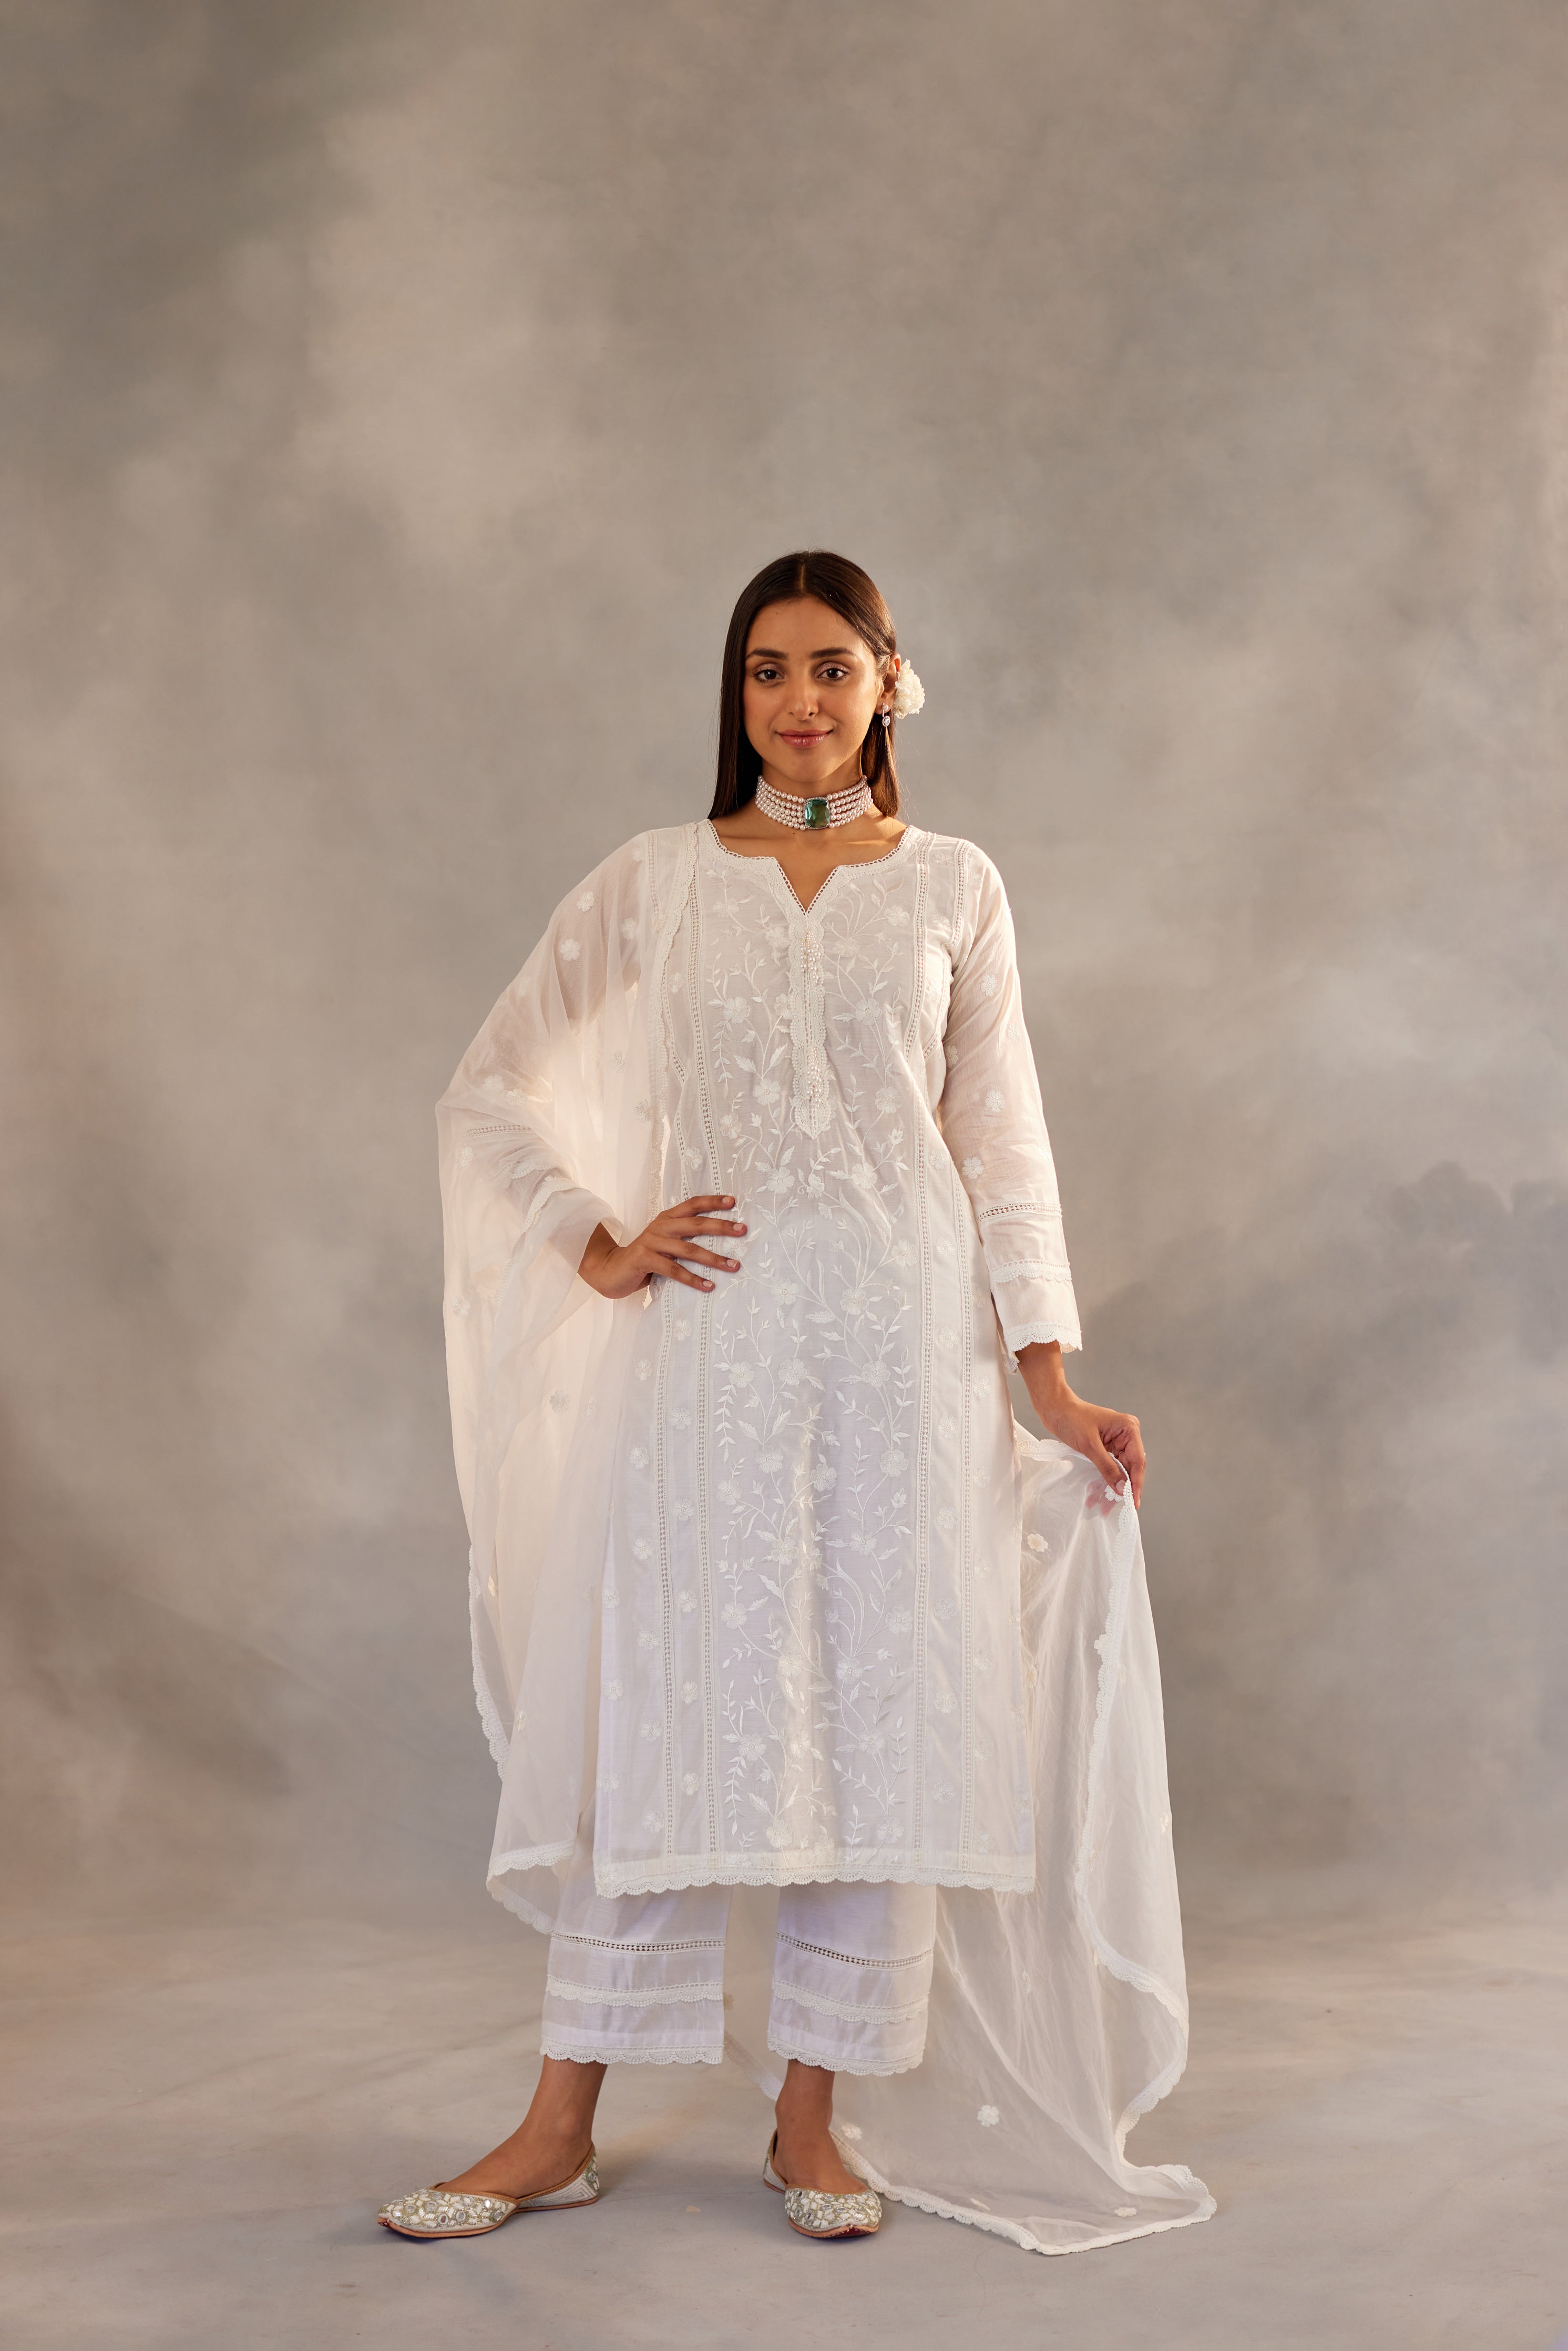 White Embroidered Dupatta Suit Set at Rs 2699.00 | कढ़ाईदार दुपट्टा,  एम्ब्रॉइडरेड दुपट्टा - Hari Om Gas Agency, Jaipur | ID: 26411237955